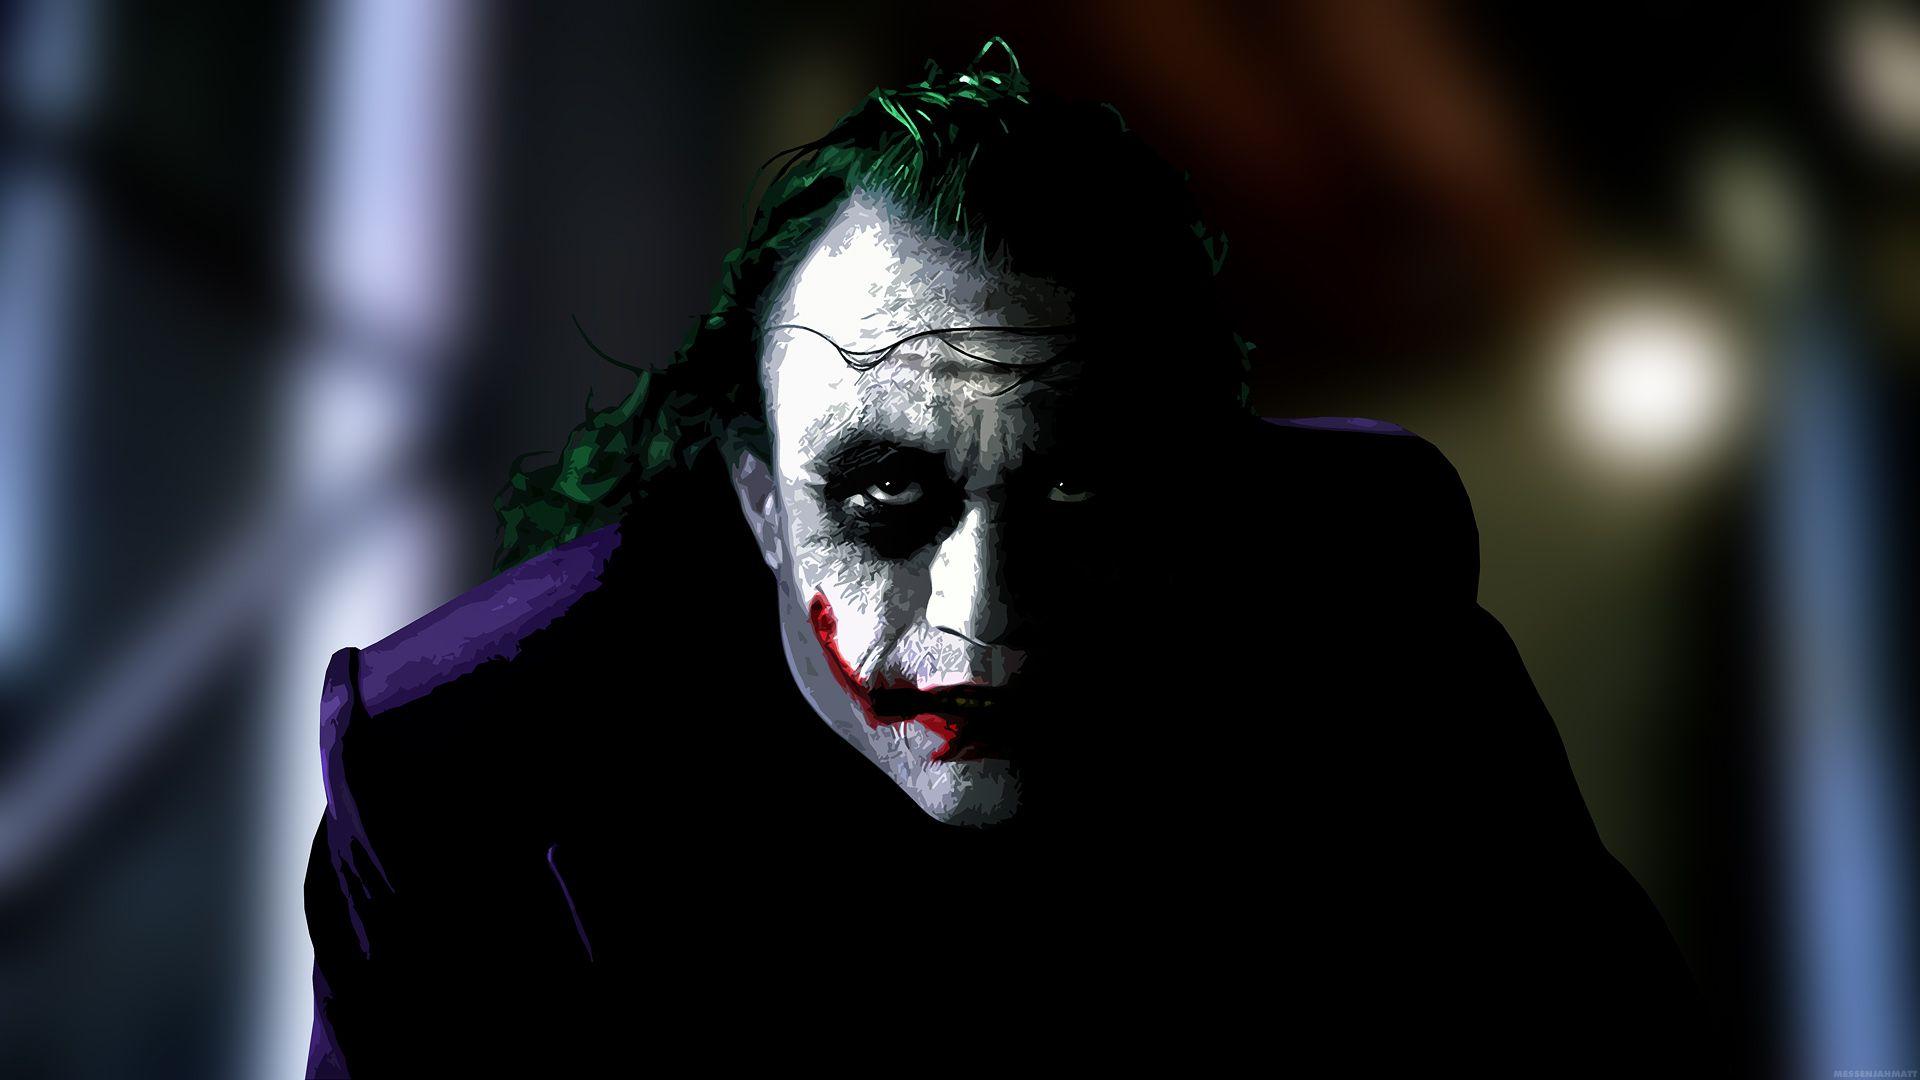 Dark Knight Joker In K Ultra Hd Wallpapers Top Free Dark Knight